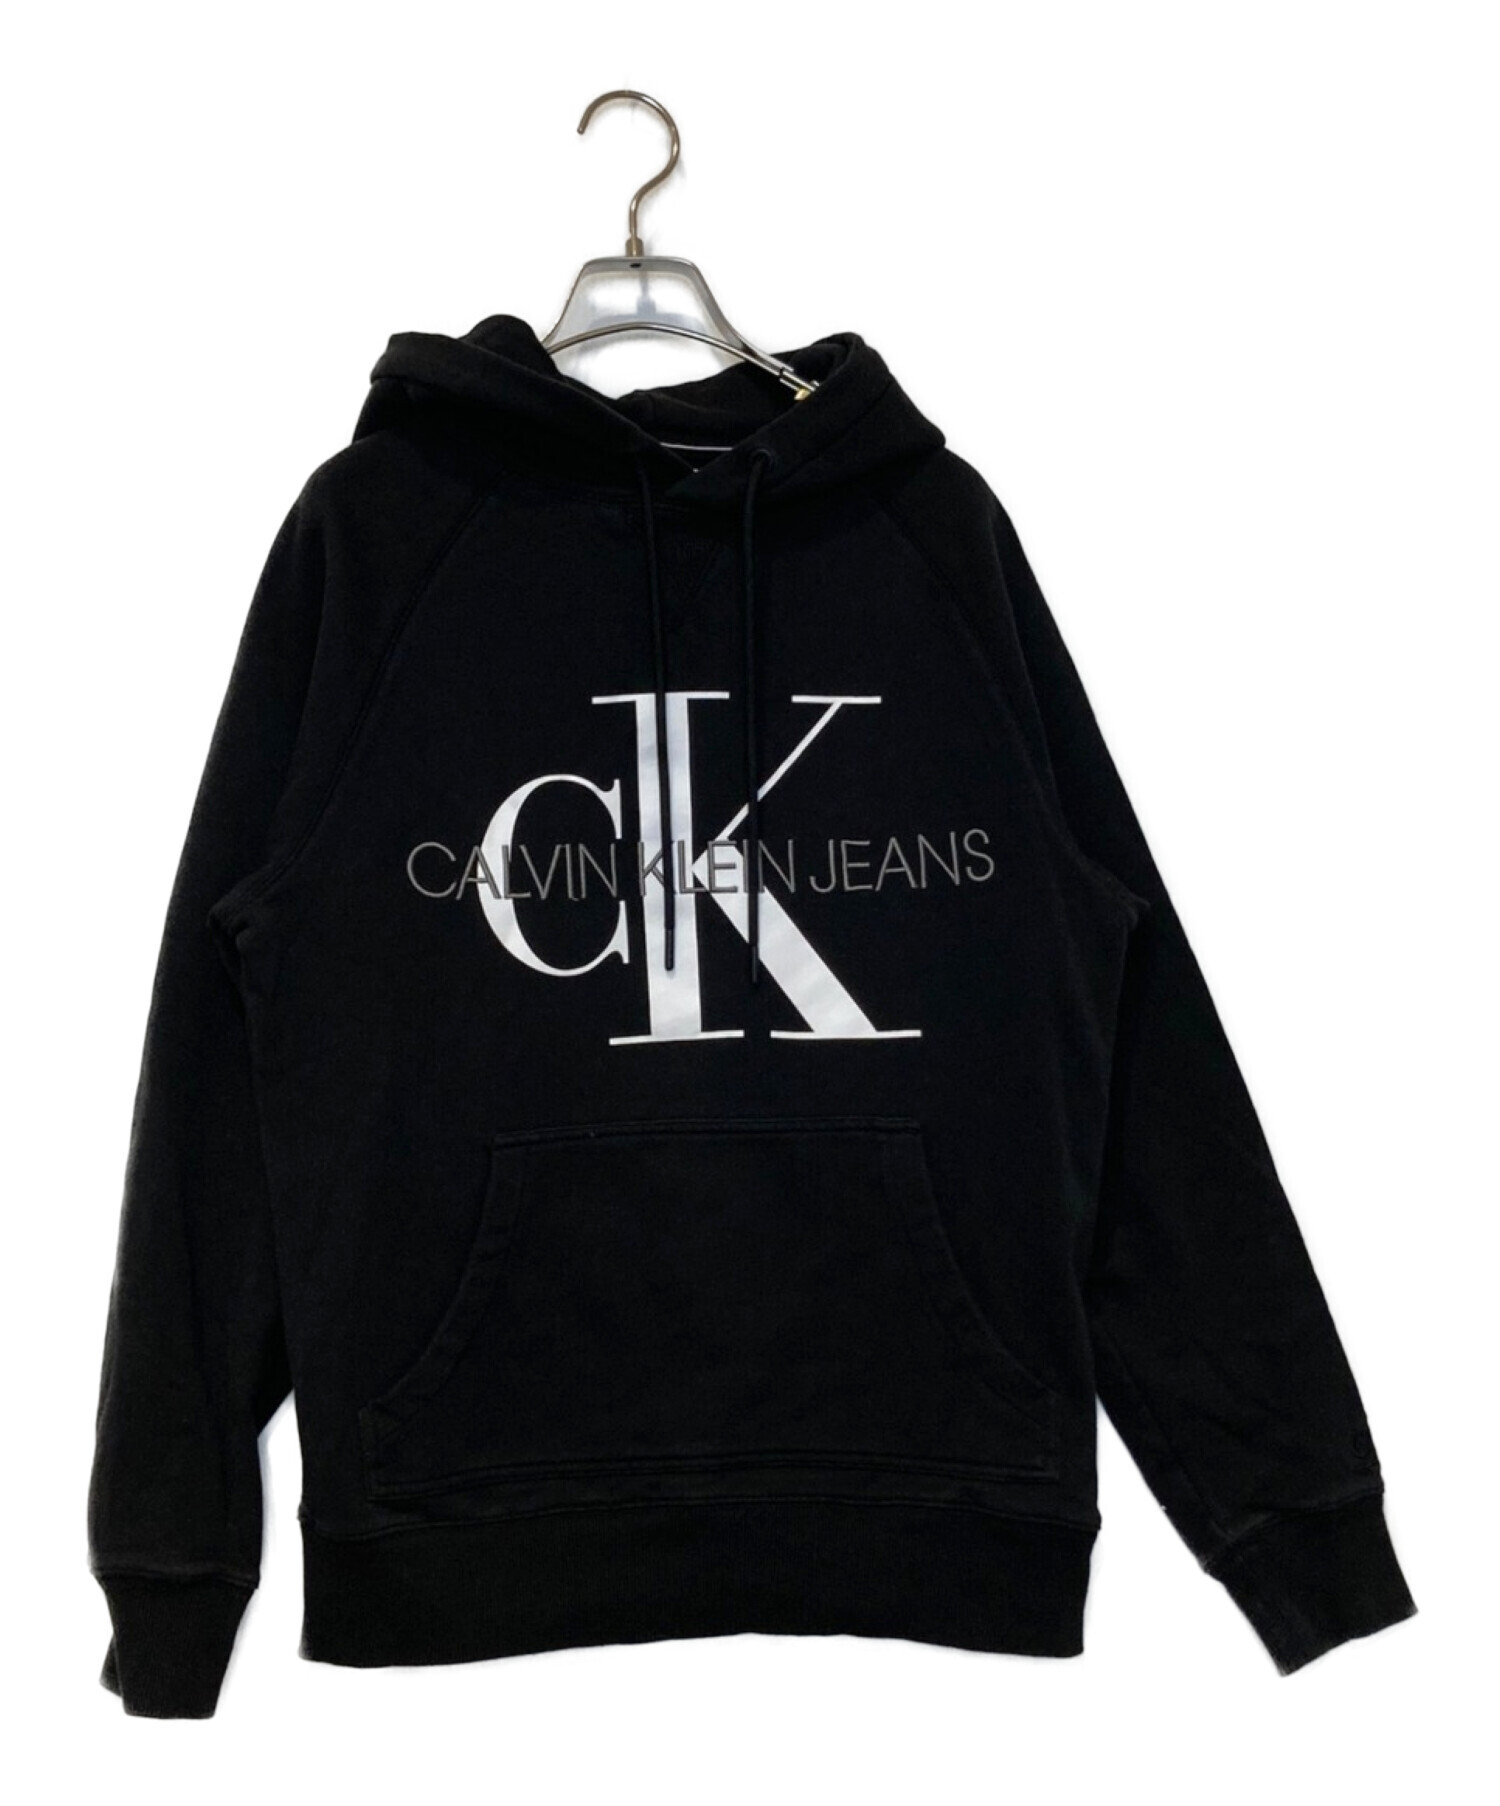 Calvin Klein Jeans (カルバンクラインジーンズ) プルオーバーパーカー ブラック サイズ:S